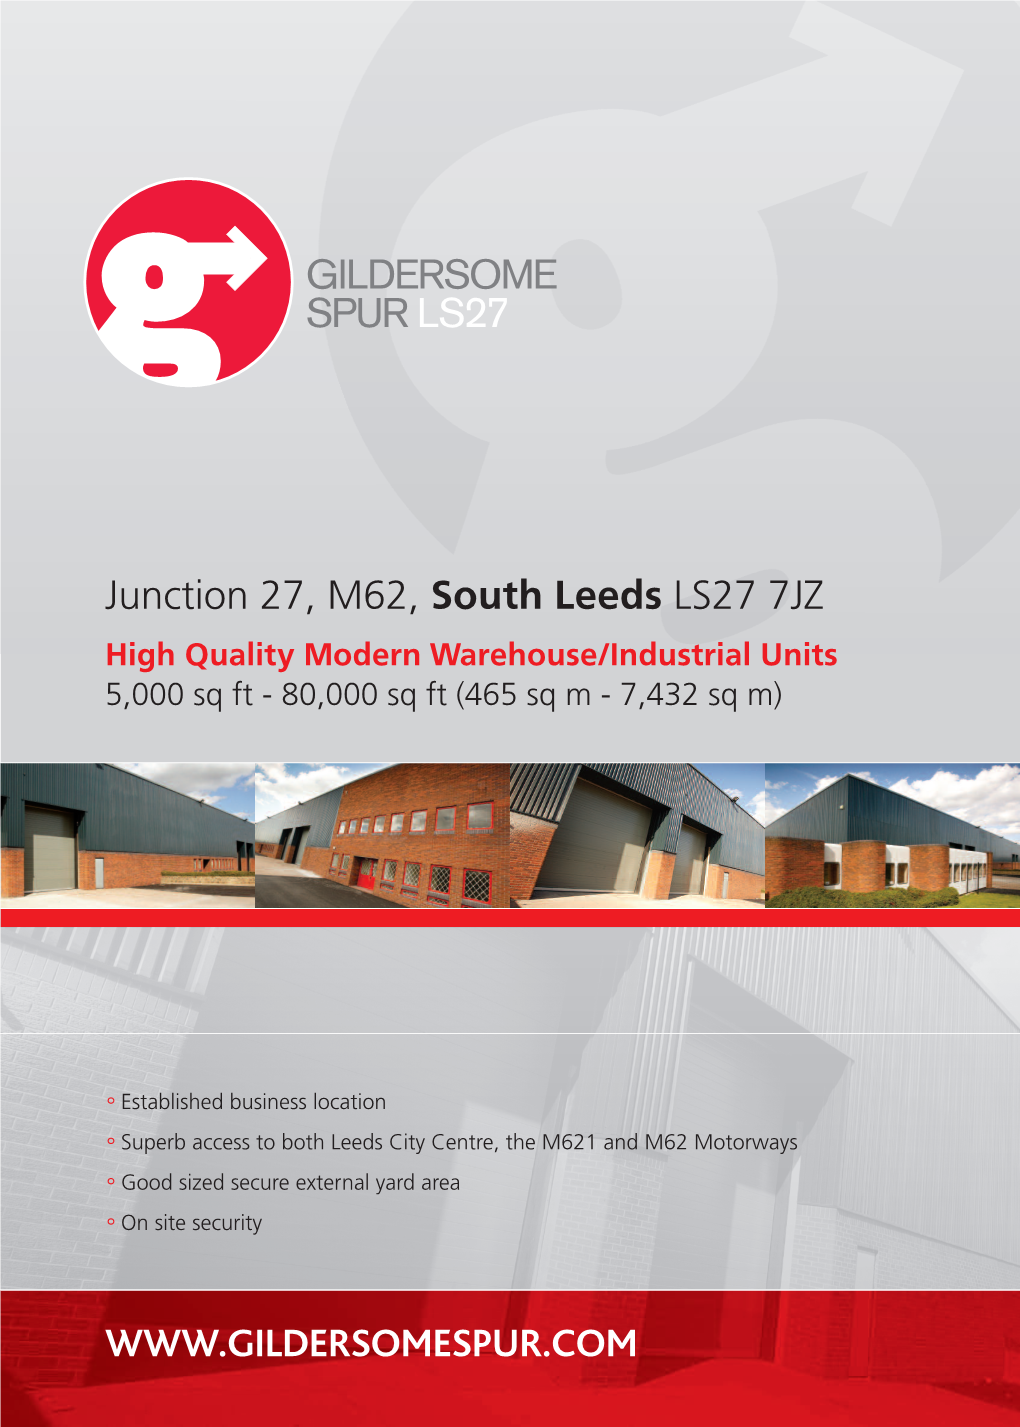 GILDERSOME SPUR LS27 Junction 27, M62, South Leeds LS27 7JZ